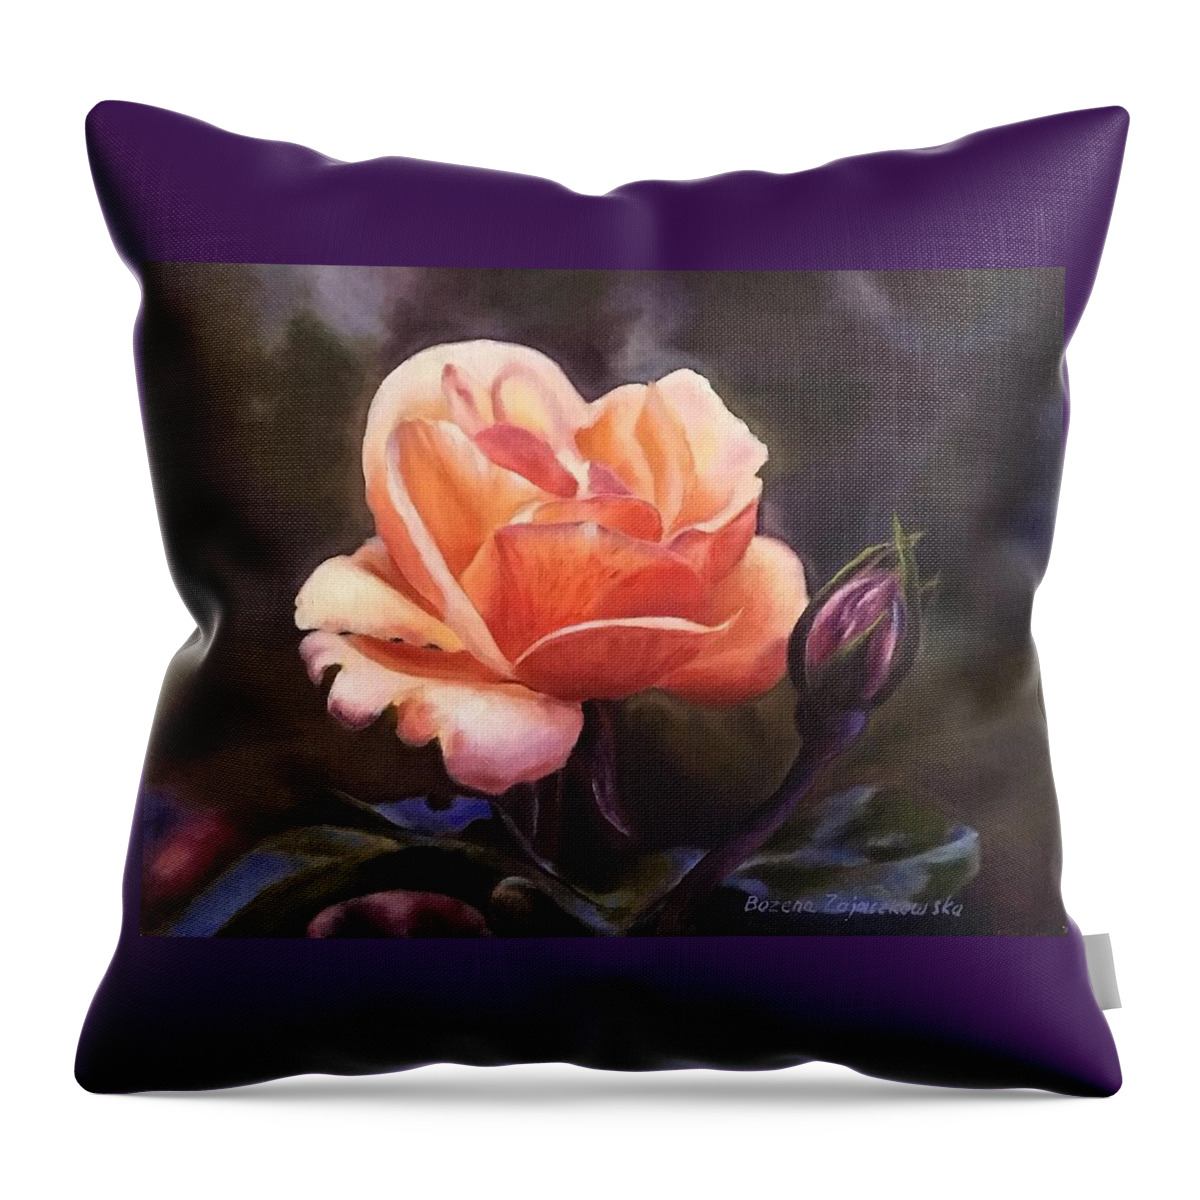 Rose Throw Pillow featuring the painting Rose for Basia by Bozena Zajaczkowska